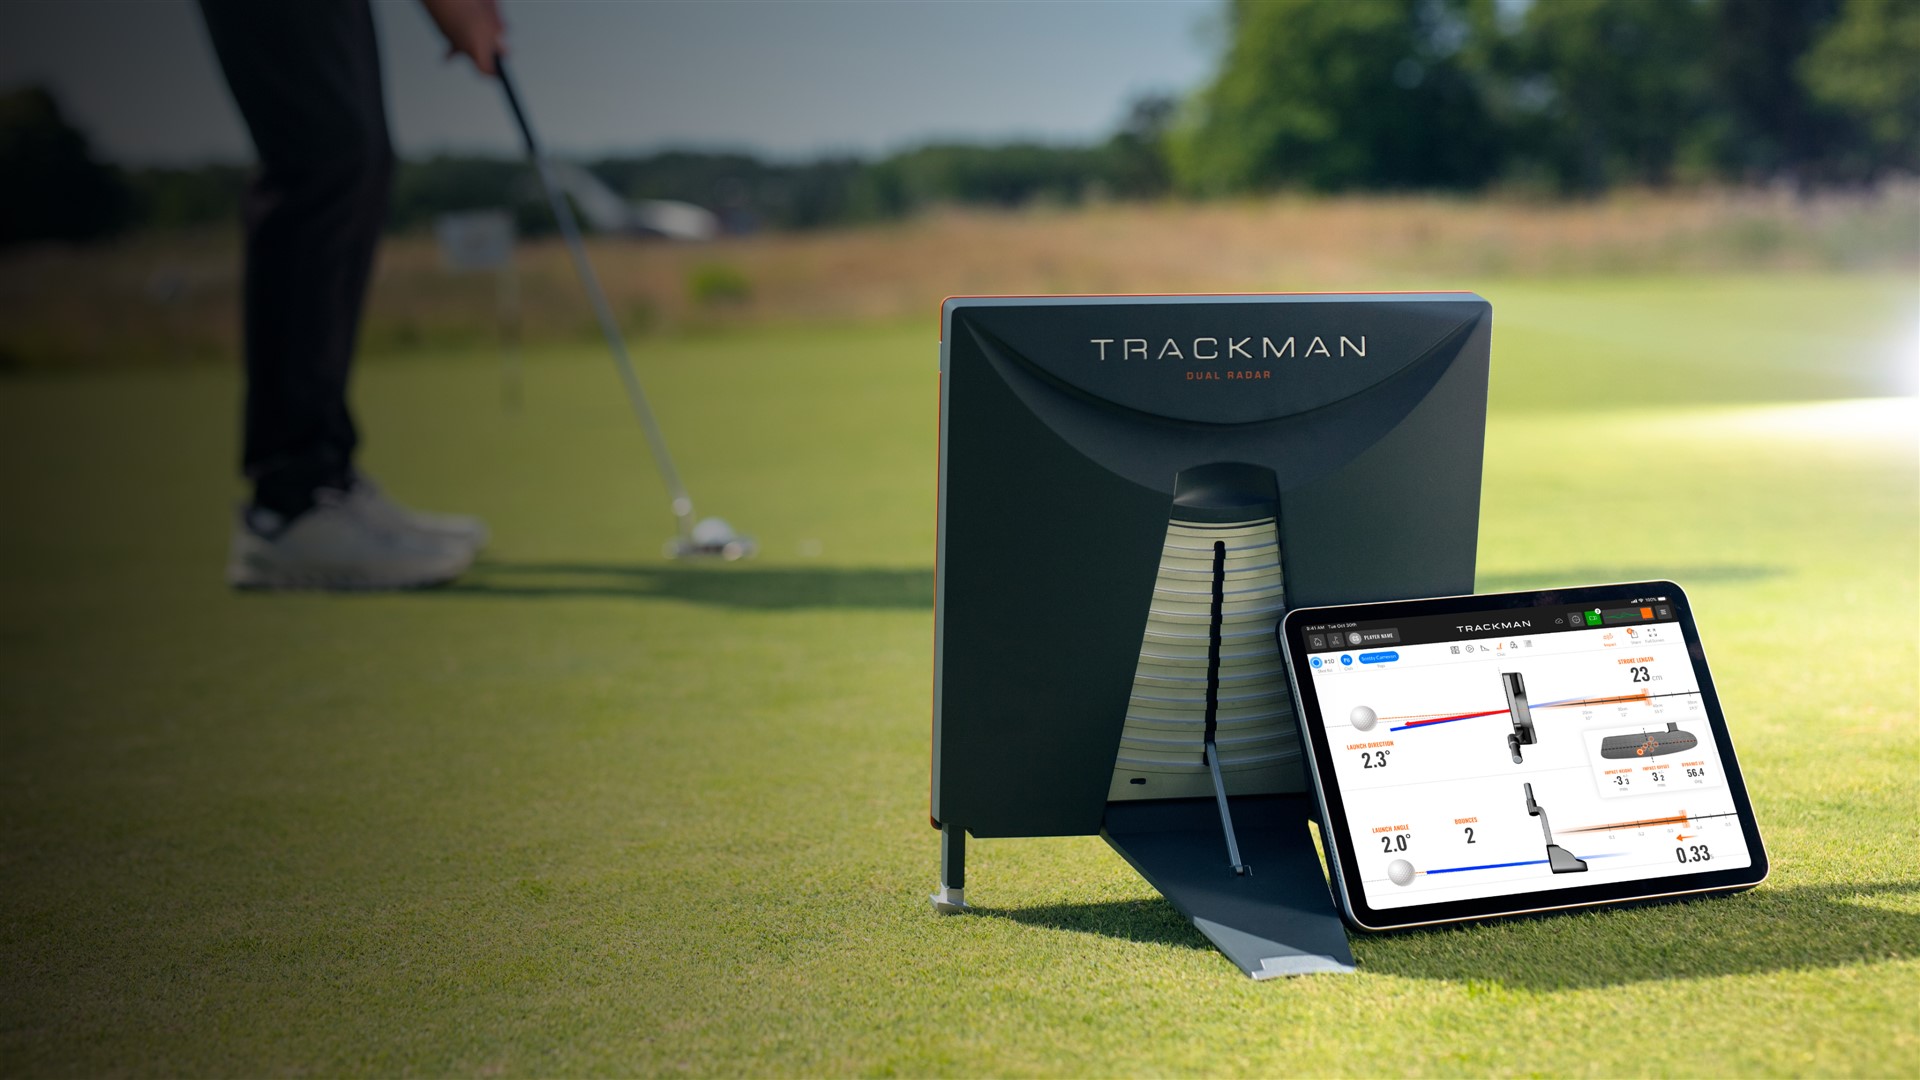 trackman 4 launch monitor header golf 1920 x 1080